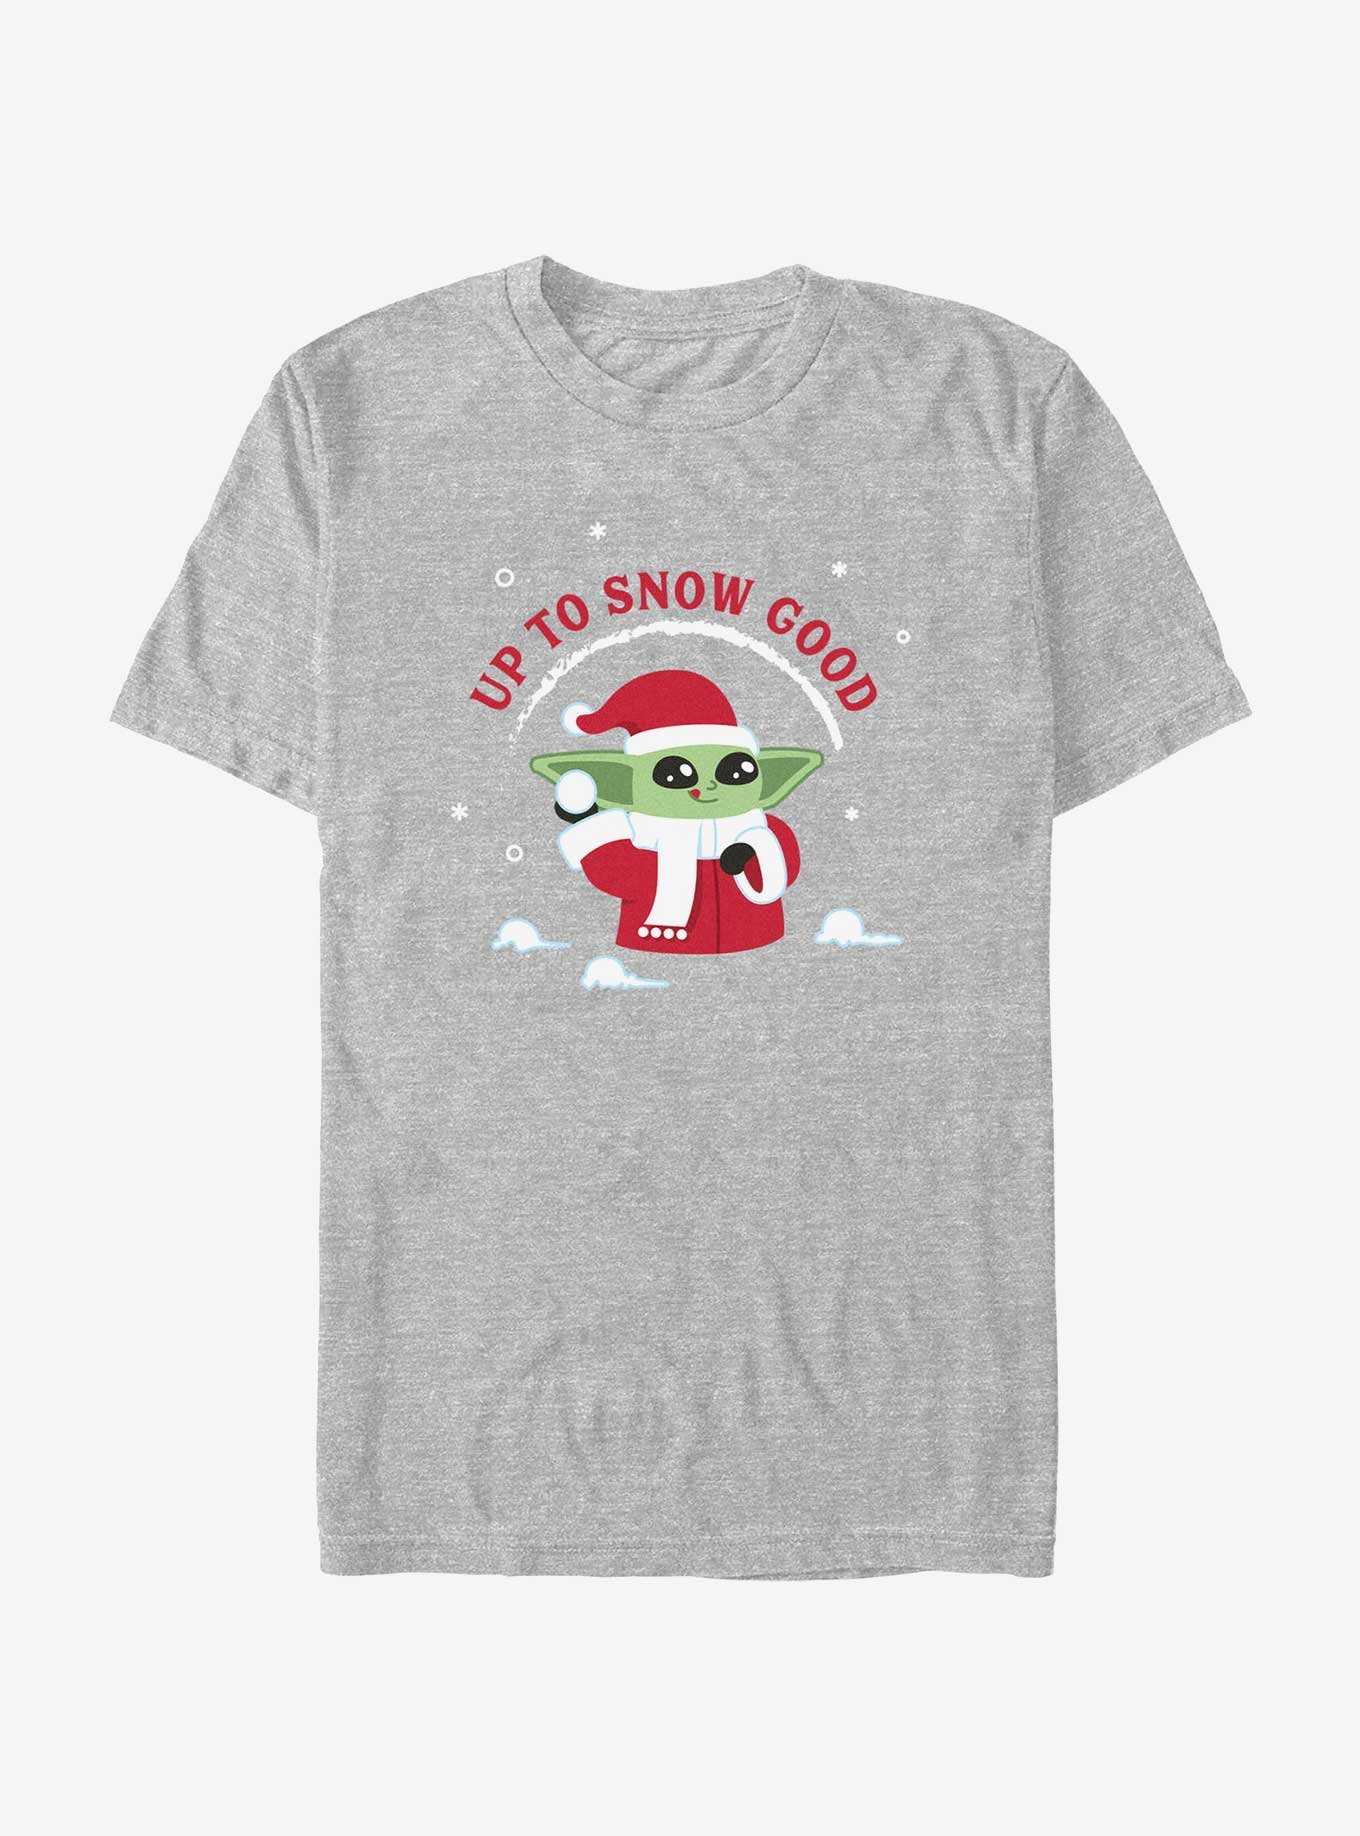 Star Wars The Mandalorian Santa Grogu Up To Snow Good T-Shirt, , hi-res